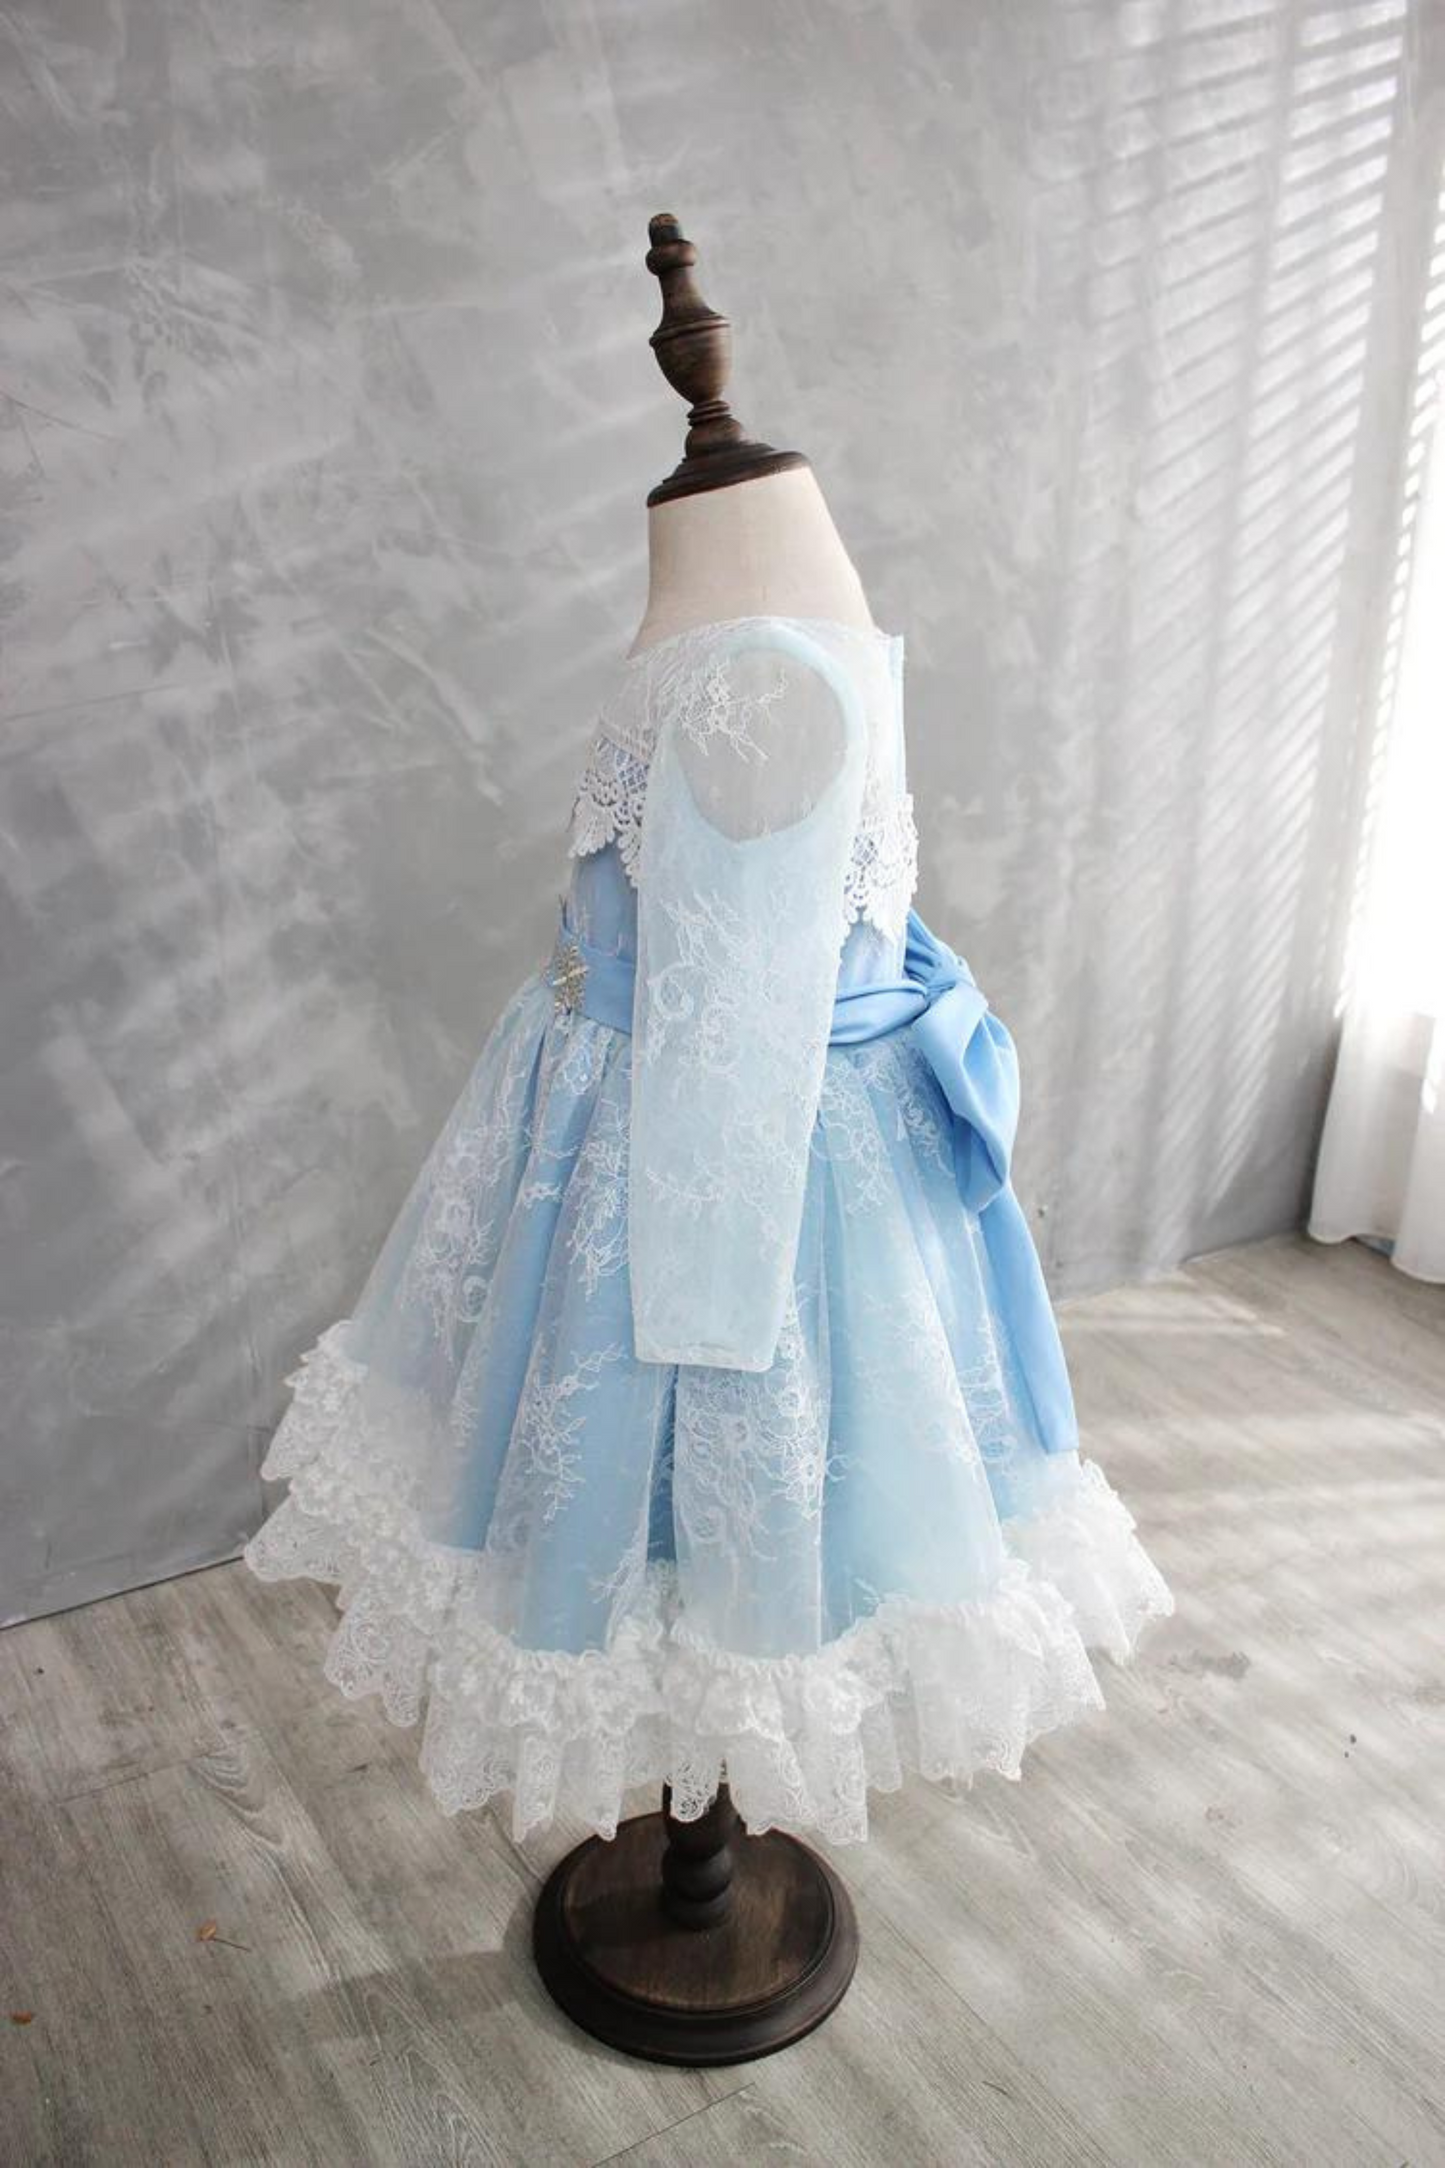 Elsa Long Sleeves Lace Dress (White/Blue/Pink)